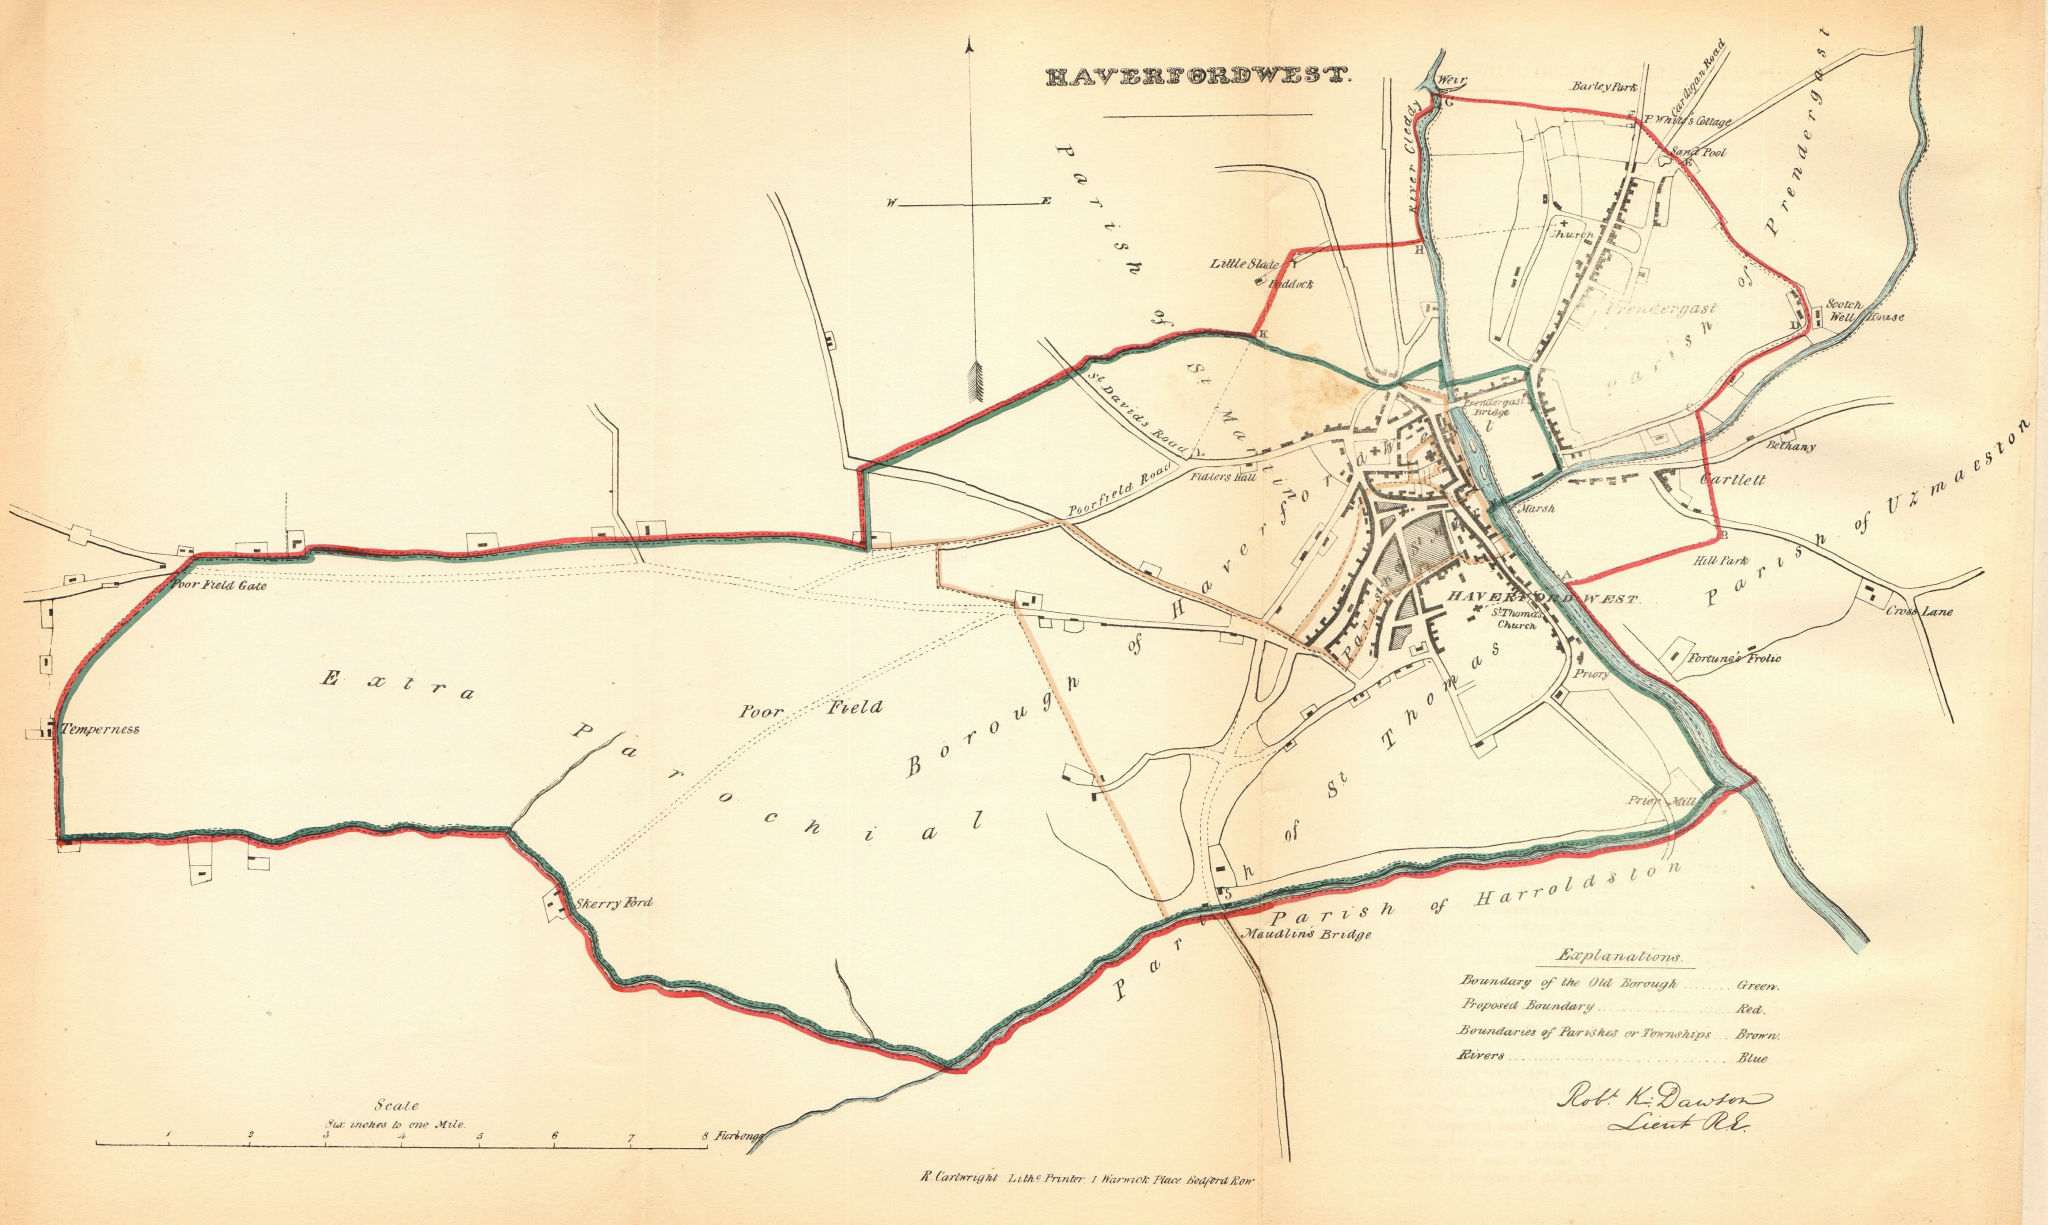 HAVERFORDWEST/HWLFFORDD borough/town plan. REFORM ACT. Wales. DAWSON 1832 map